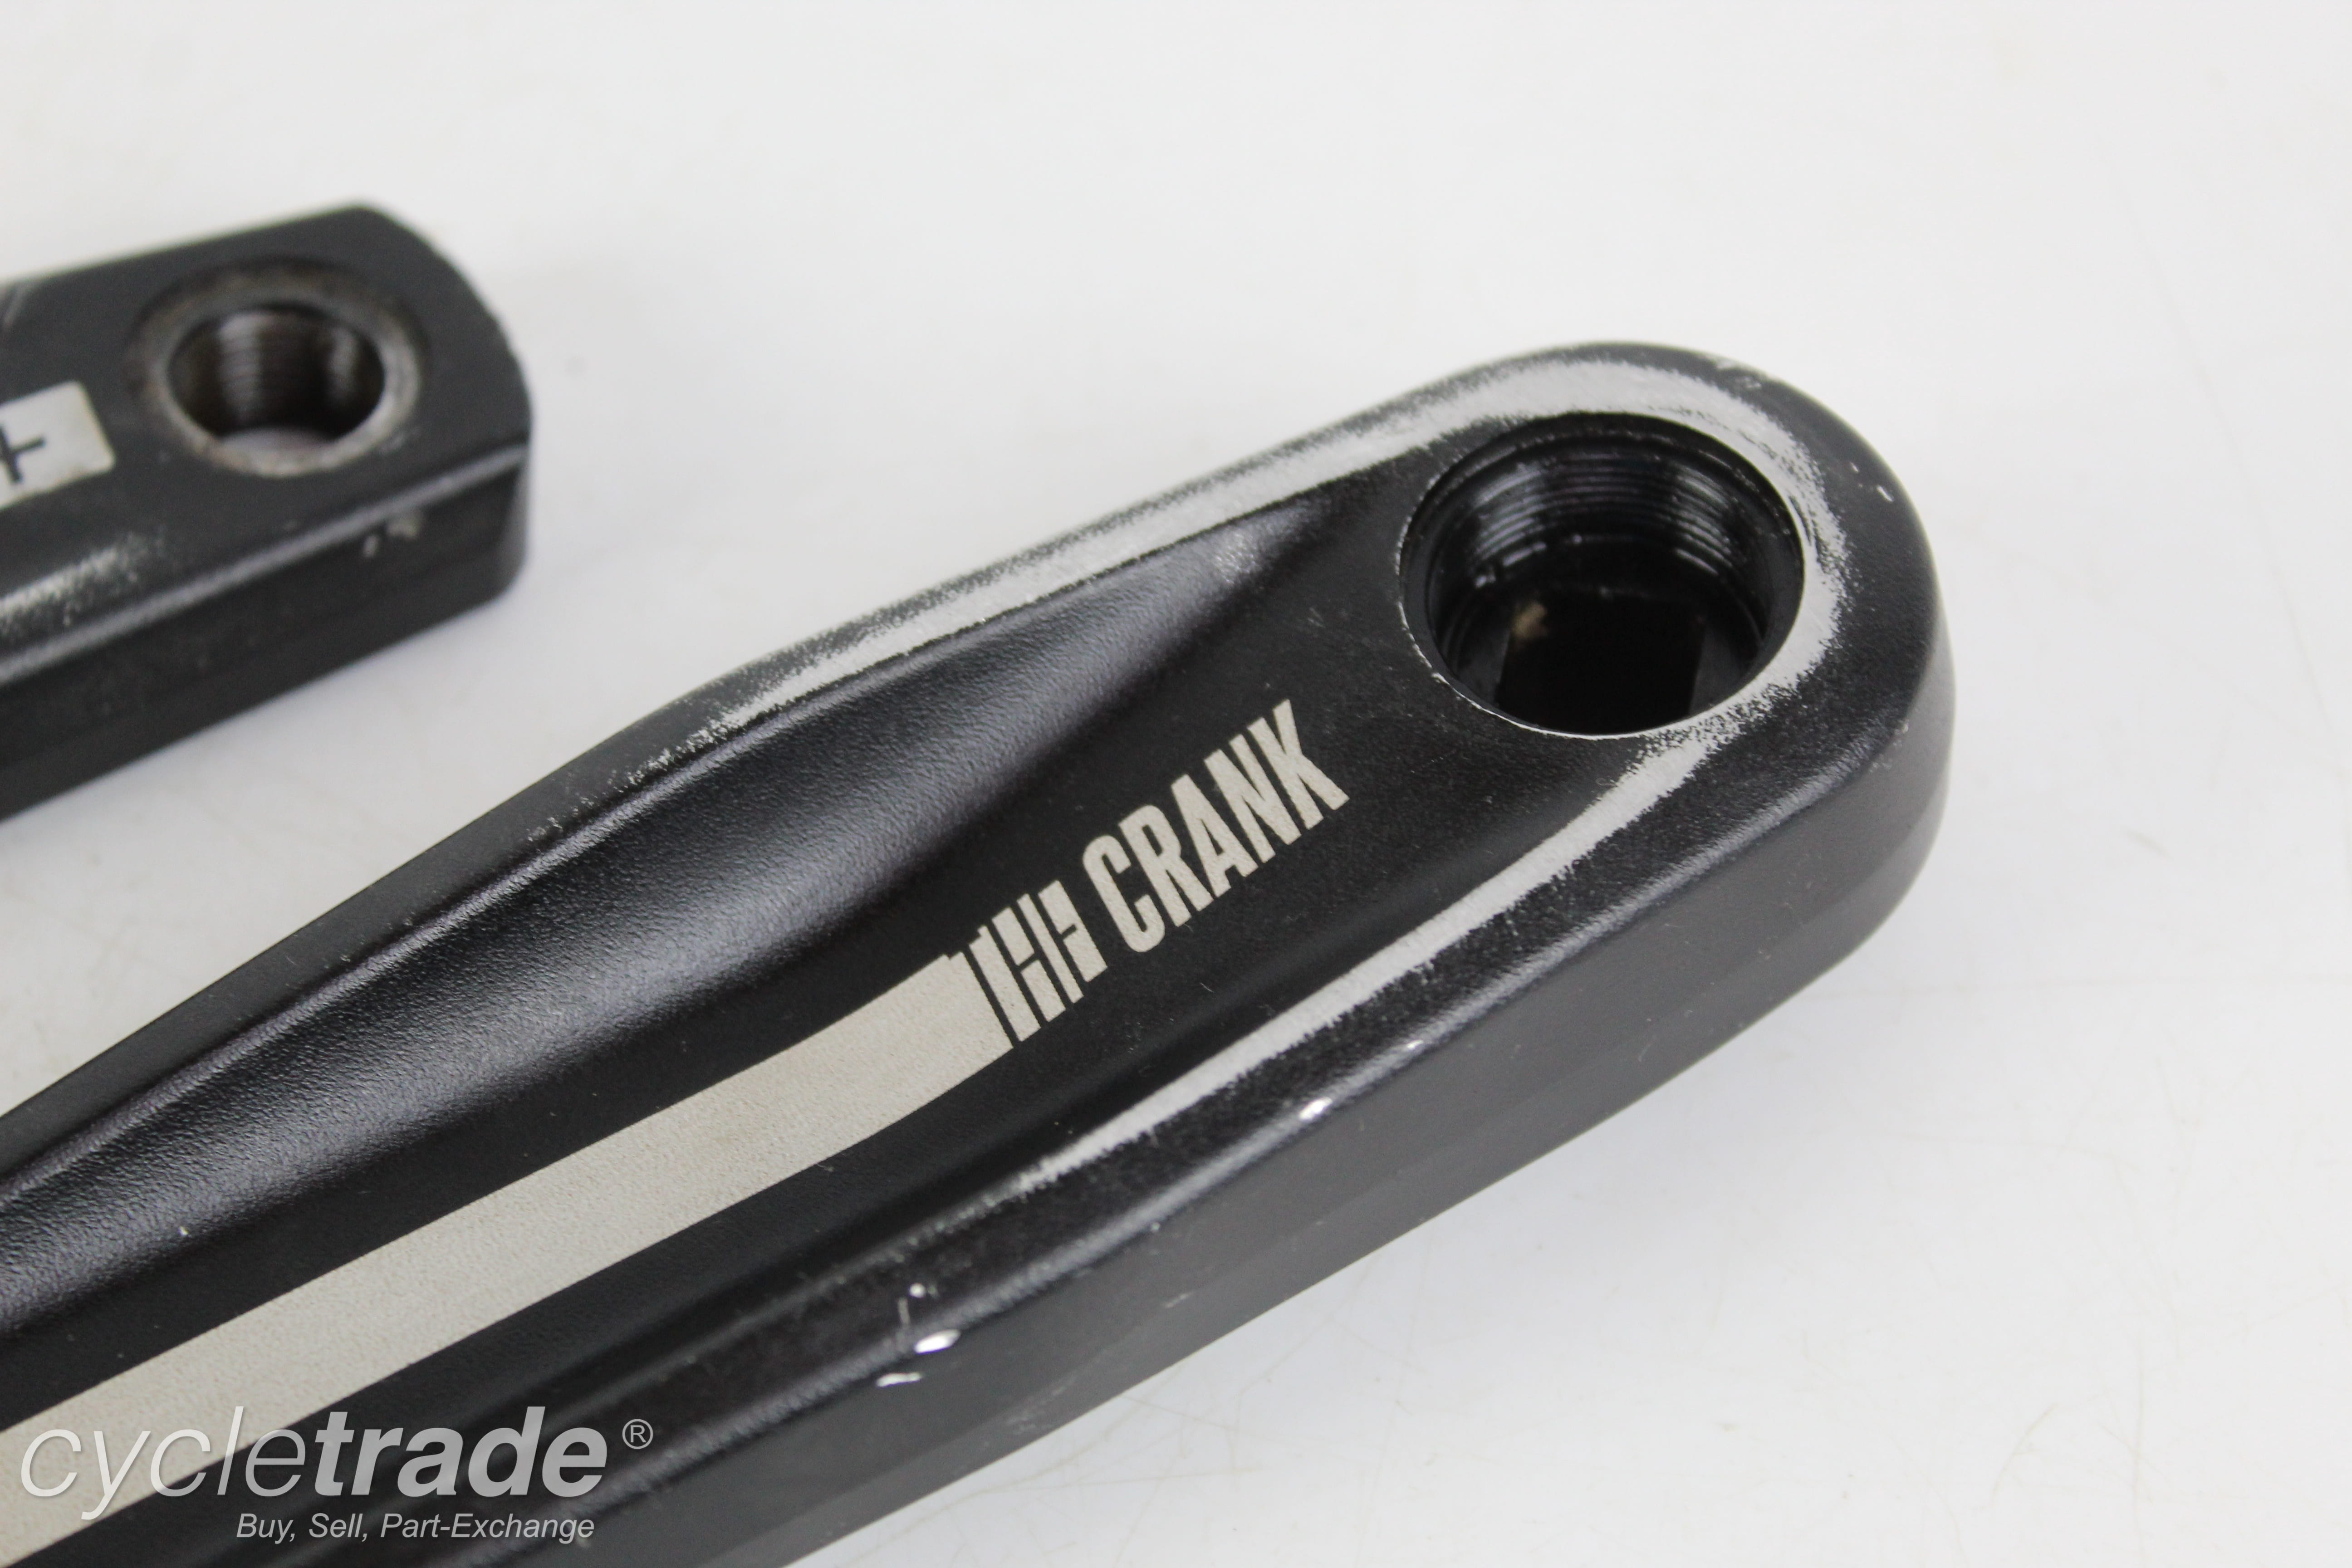 Crank Arm Set - Haibike, The Crank 170mm - Grade B-